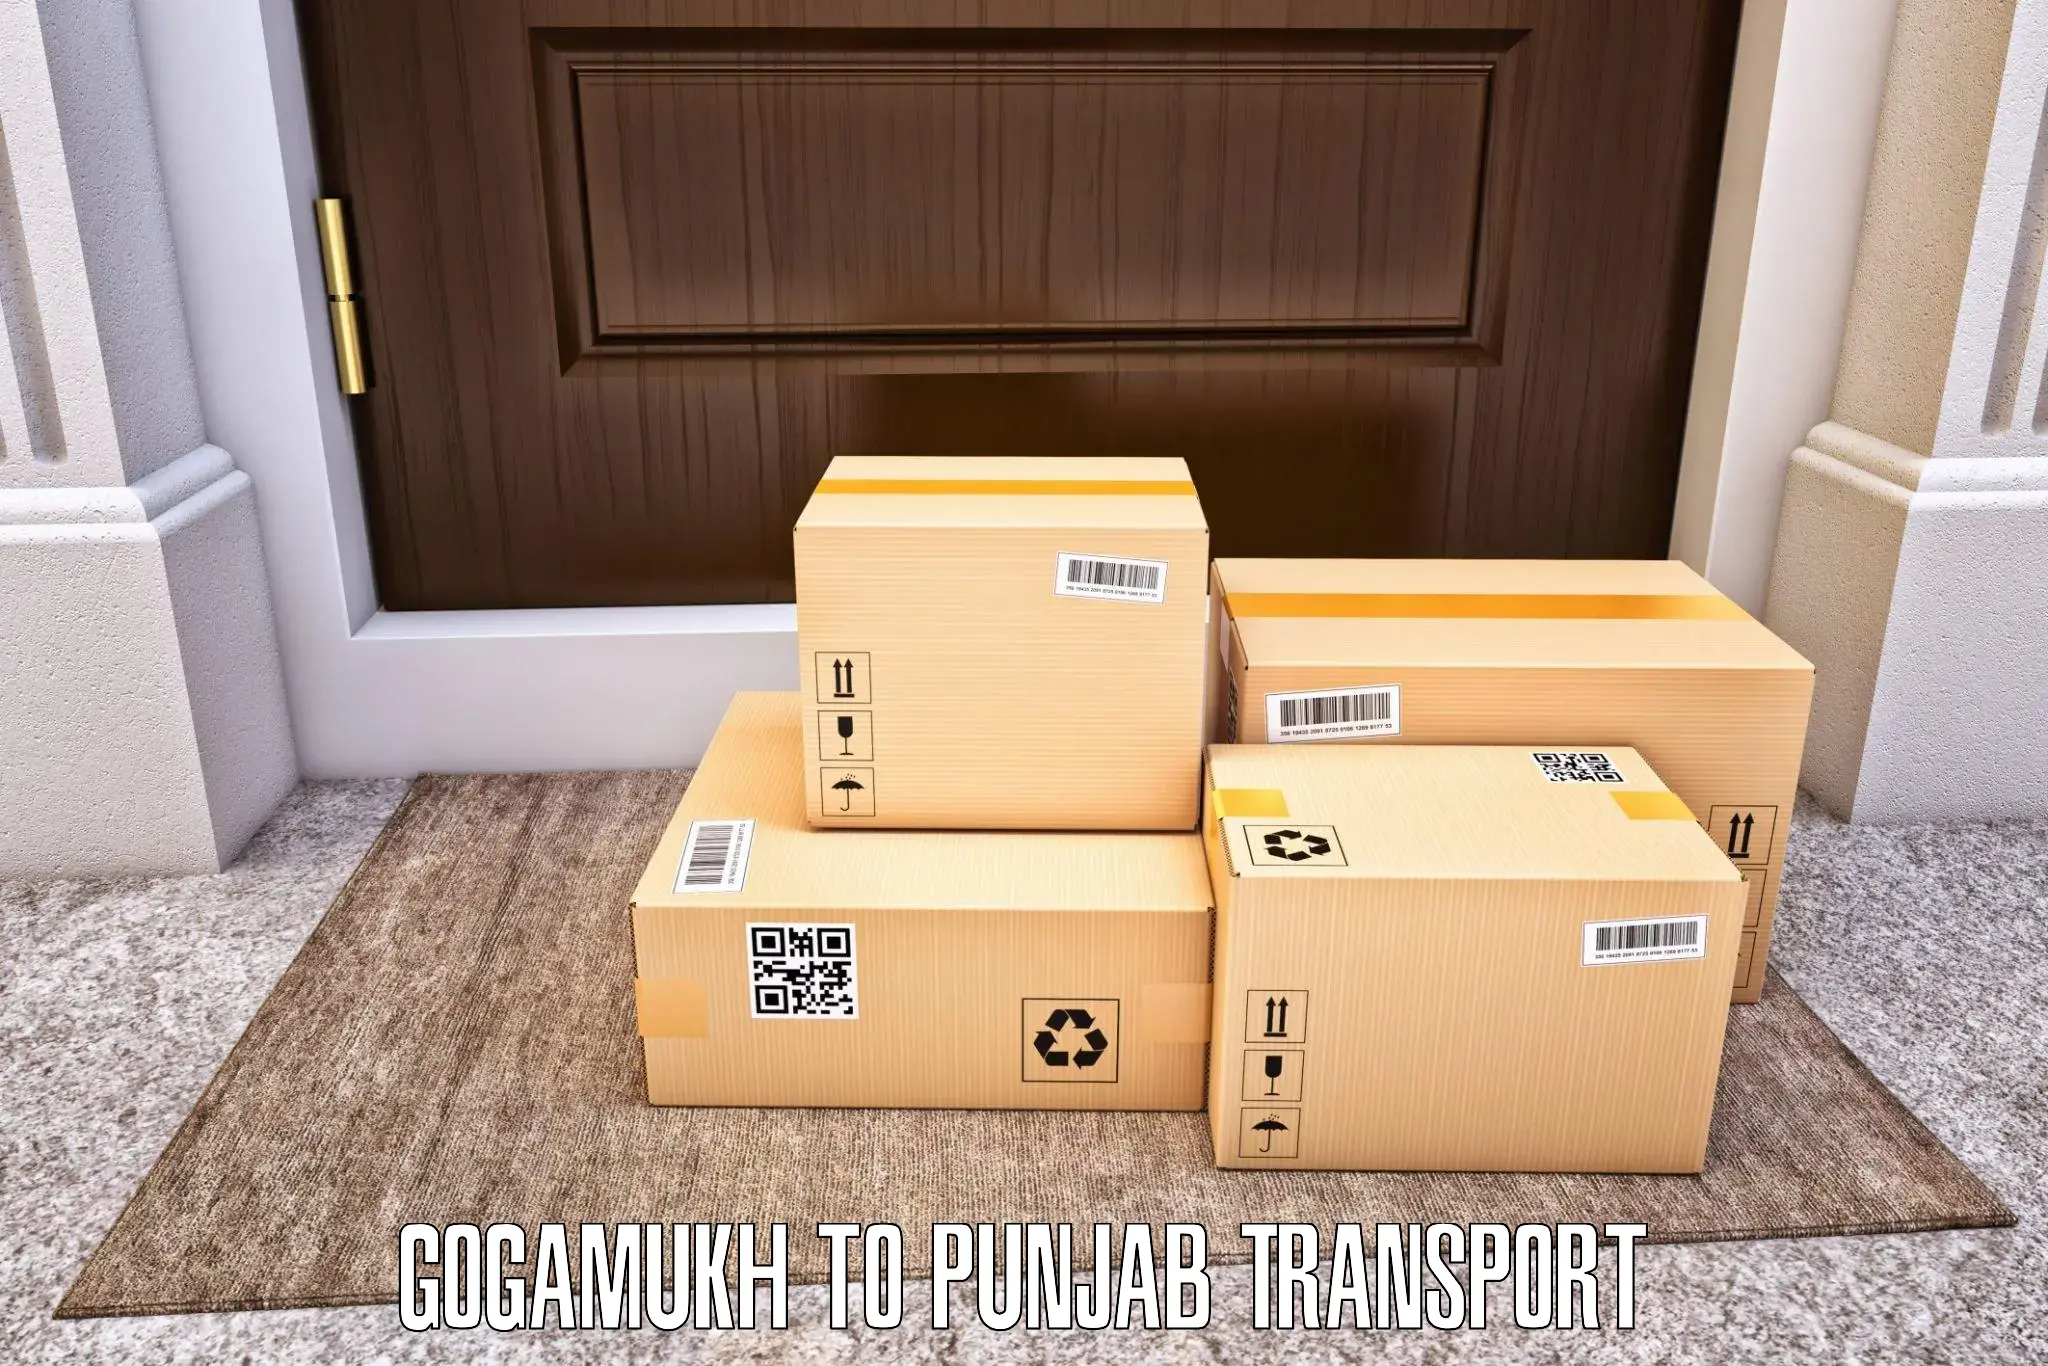 Container transport service Gogamukh to Mandi Gobindgarh